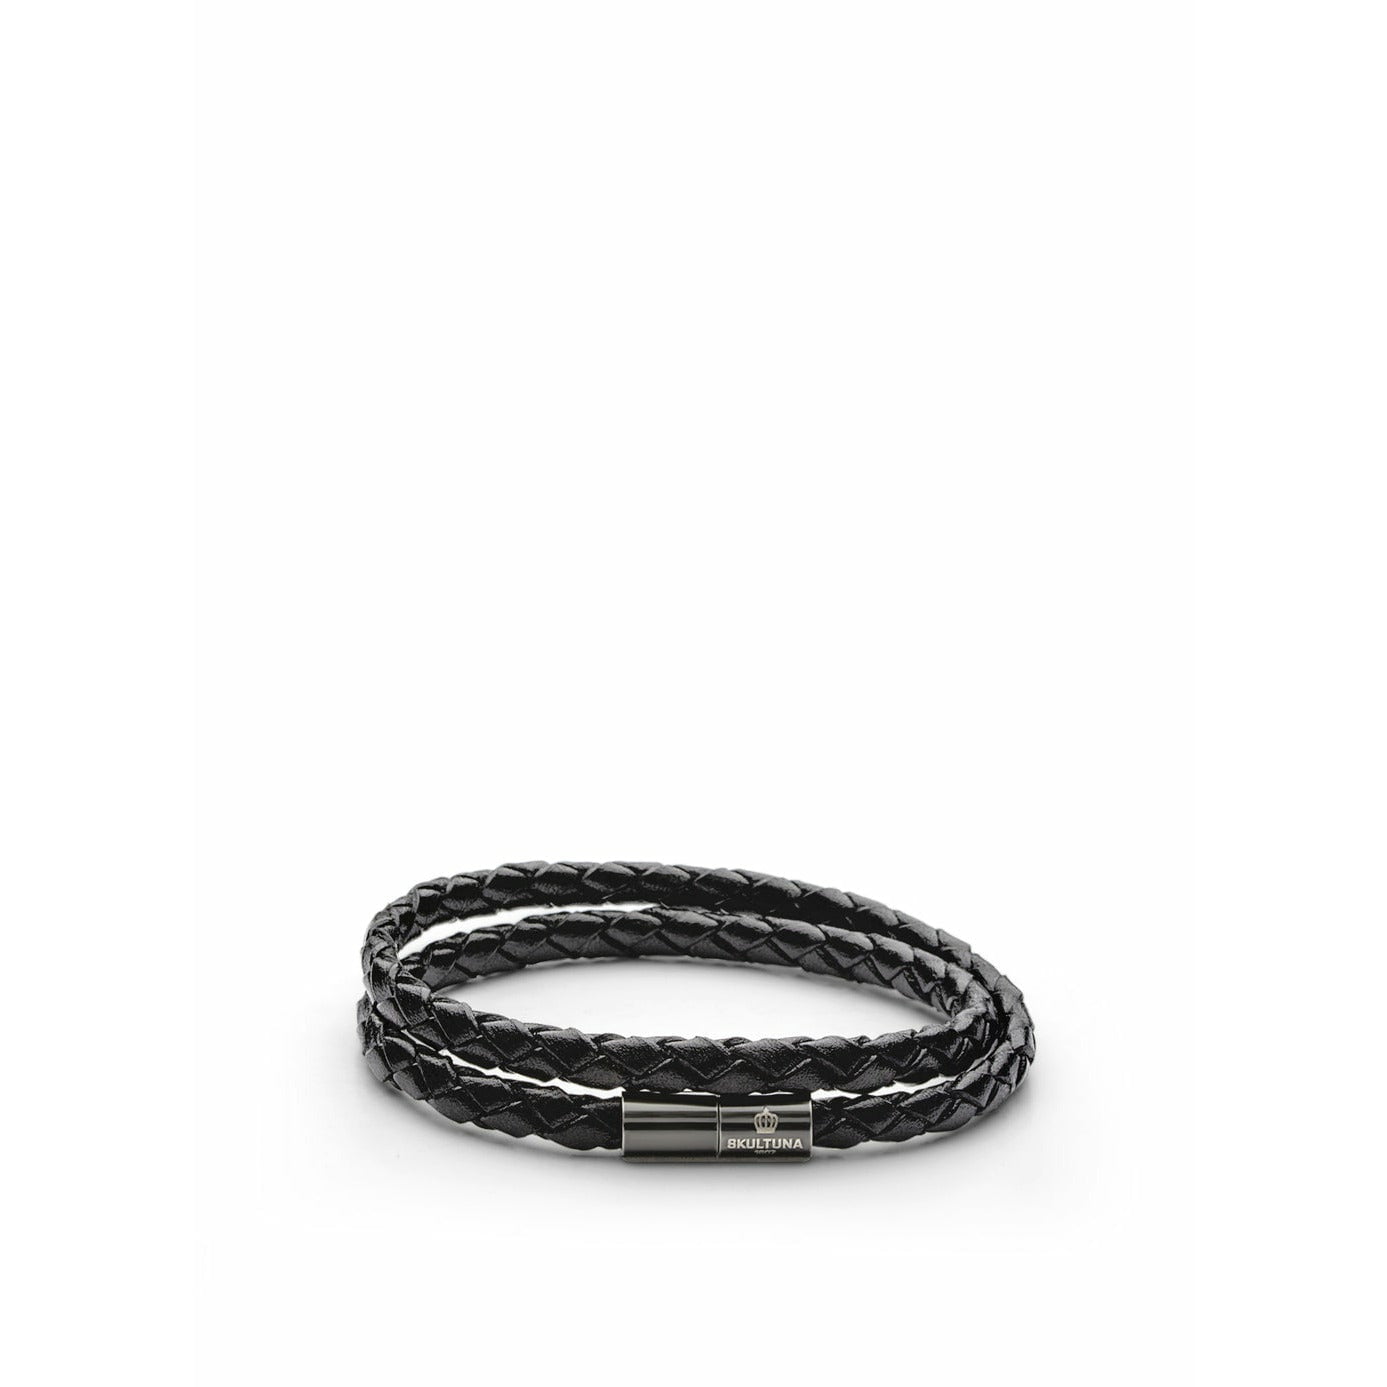 Skultuna Het stealth -armbandmedium Ø16,5 cm, zwart